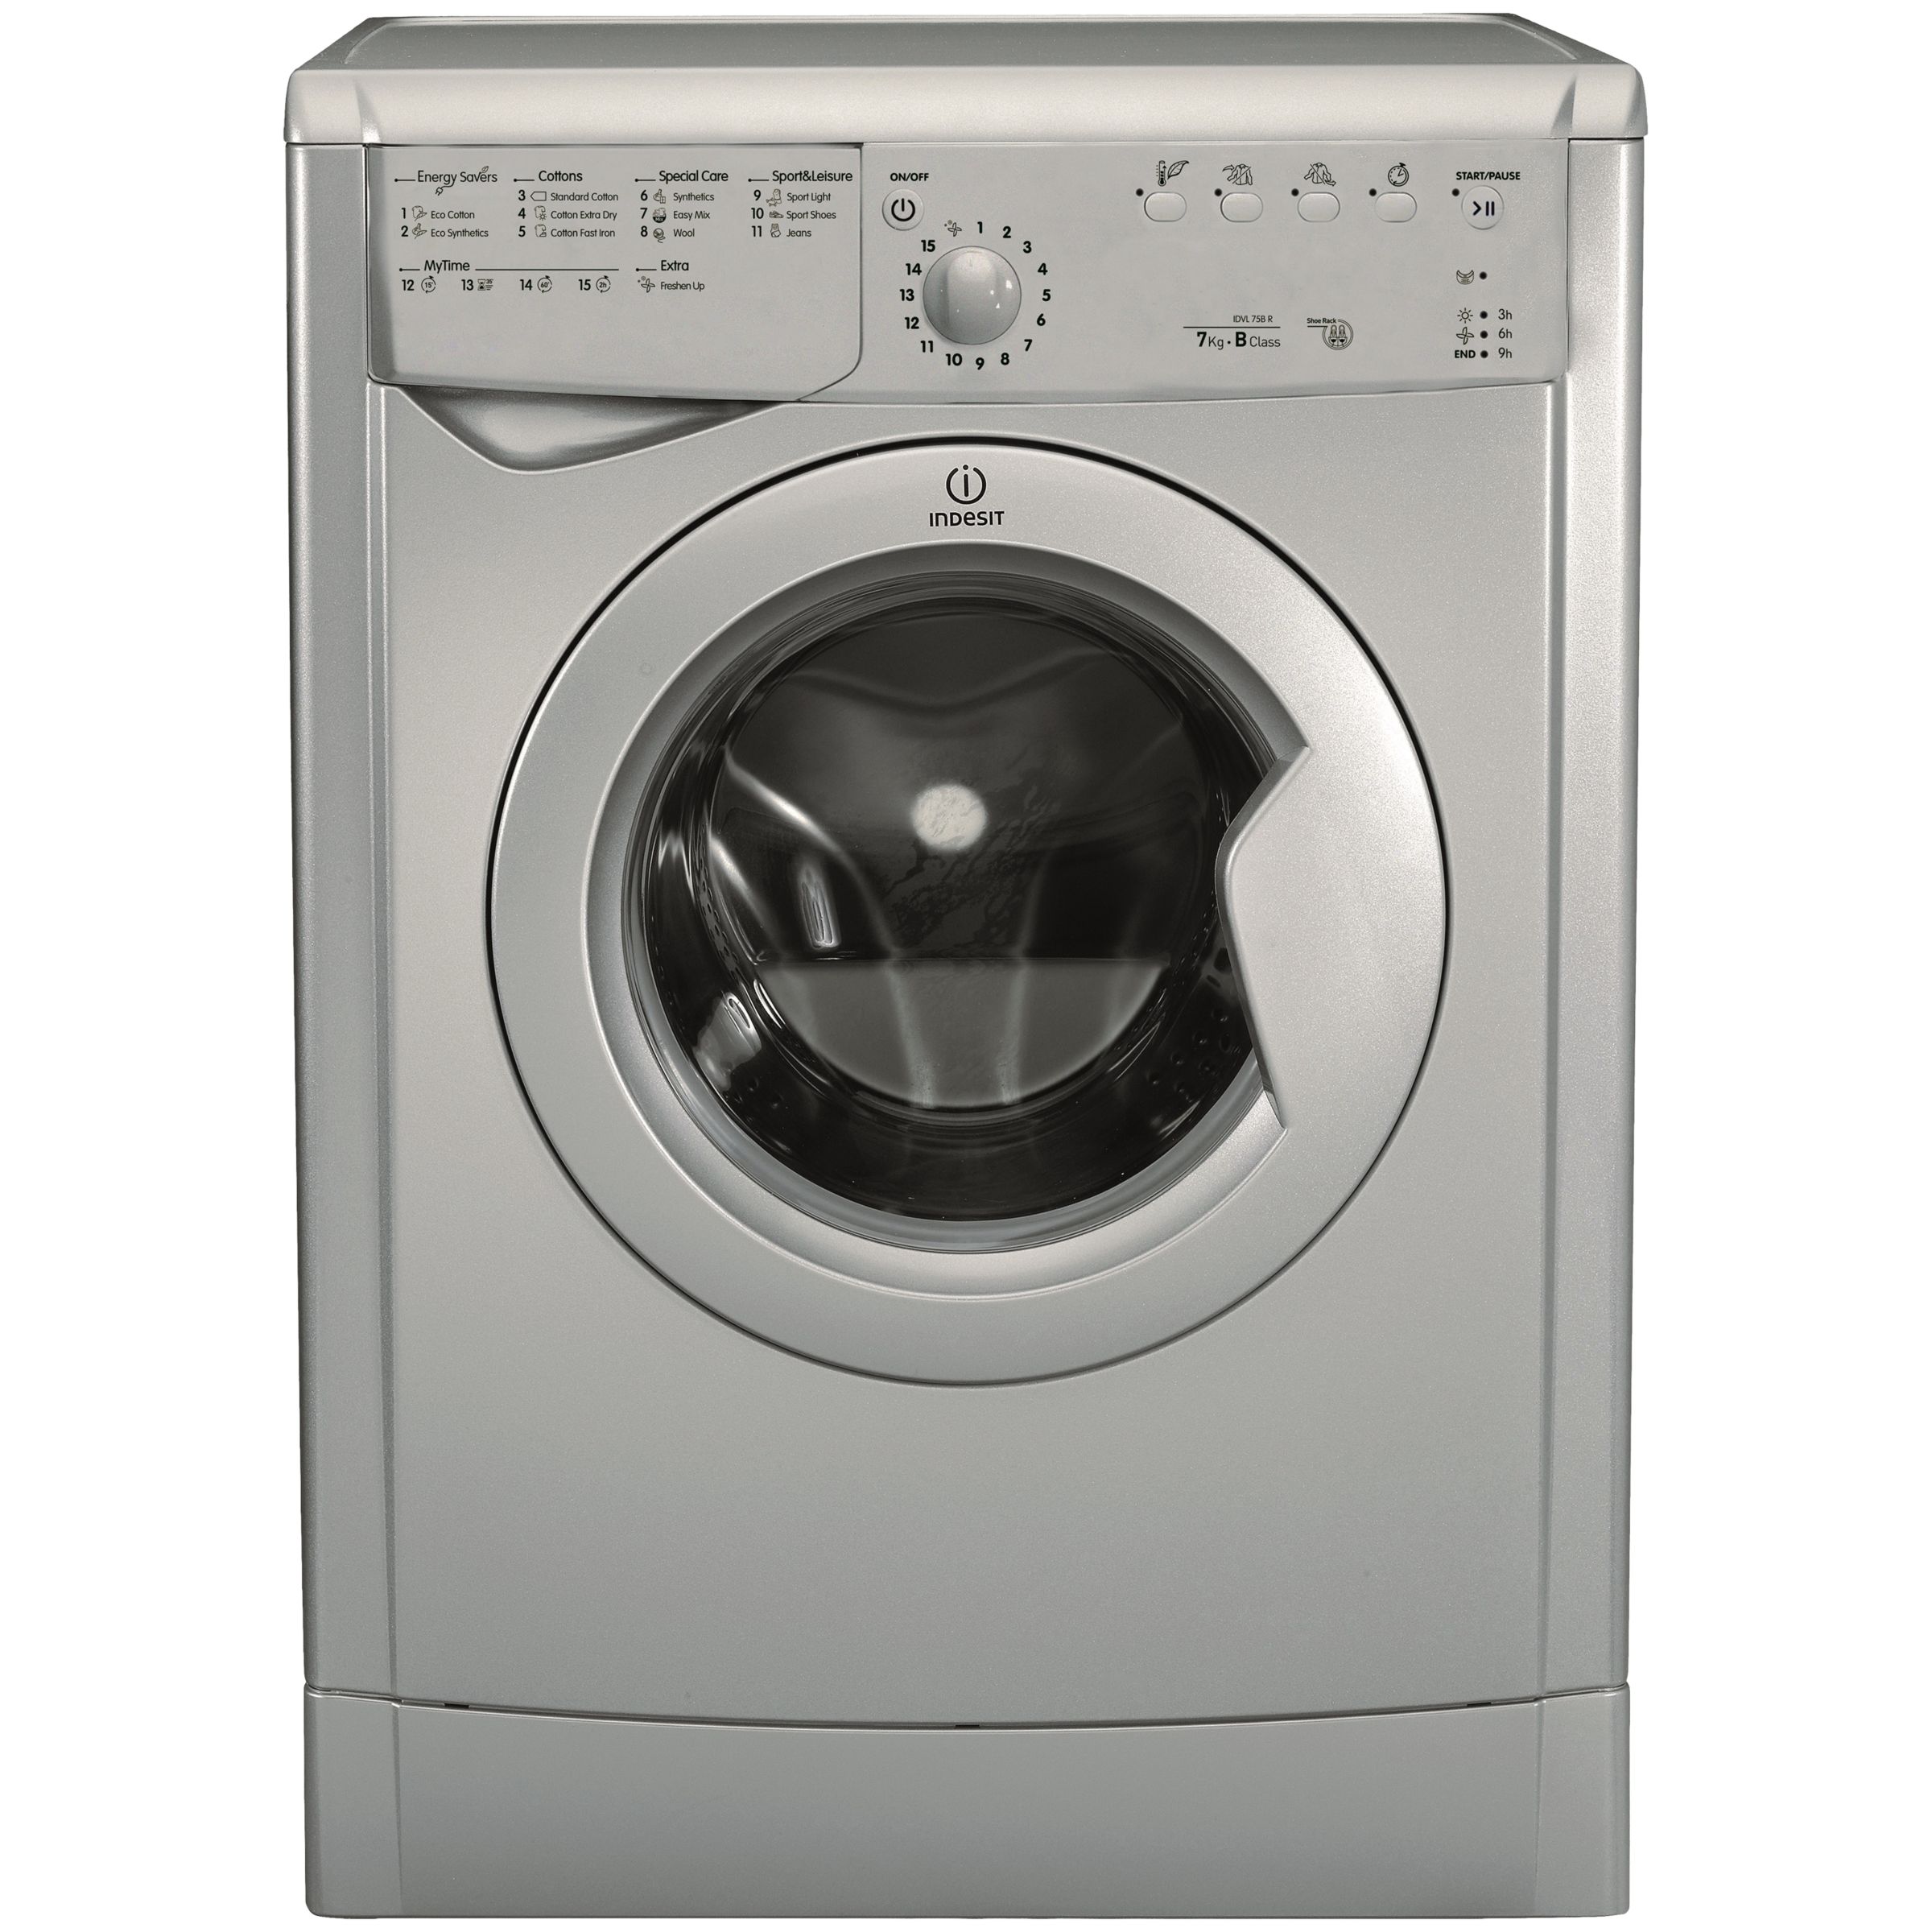 Indesit IDVL75BRS.9 Freestanding Vented Tumble Dryer, 7kg Load, B Energy Rating, Silver